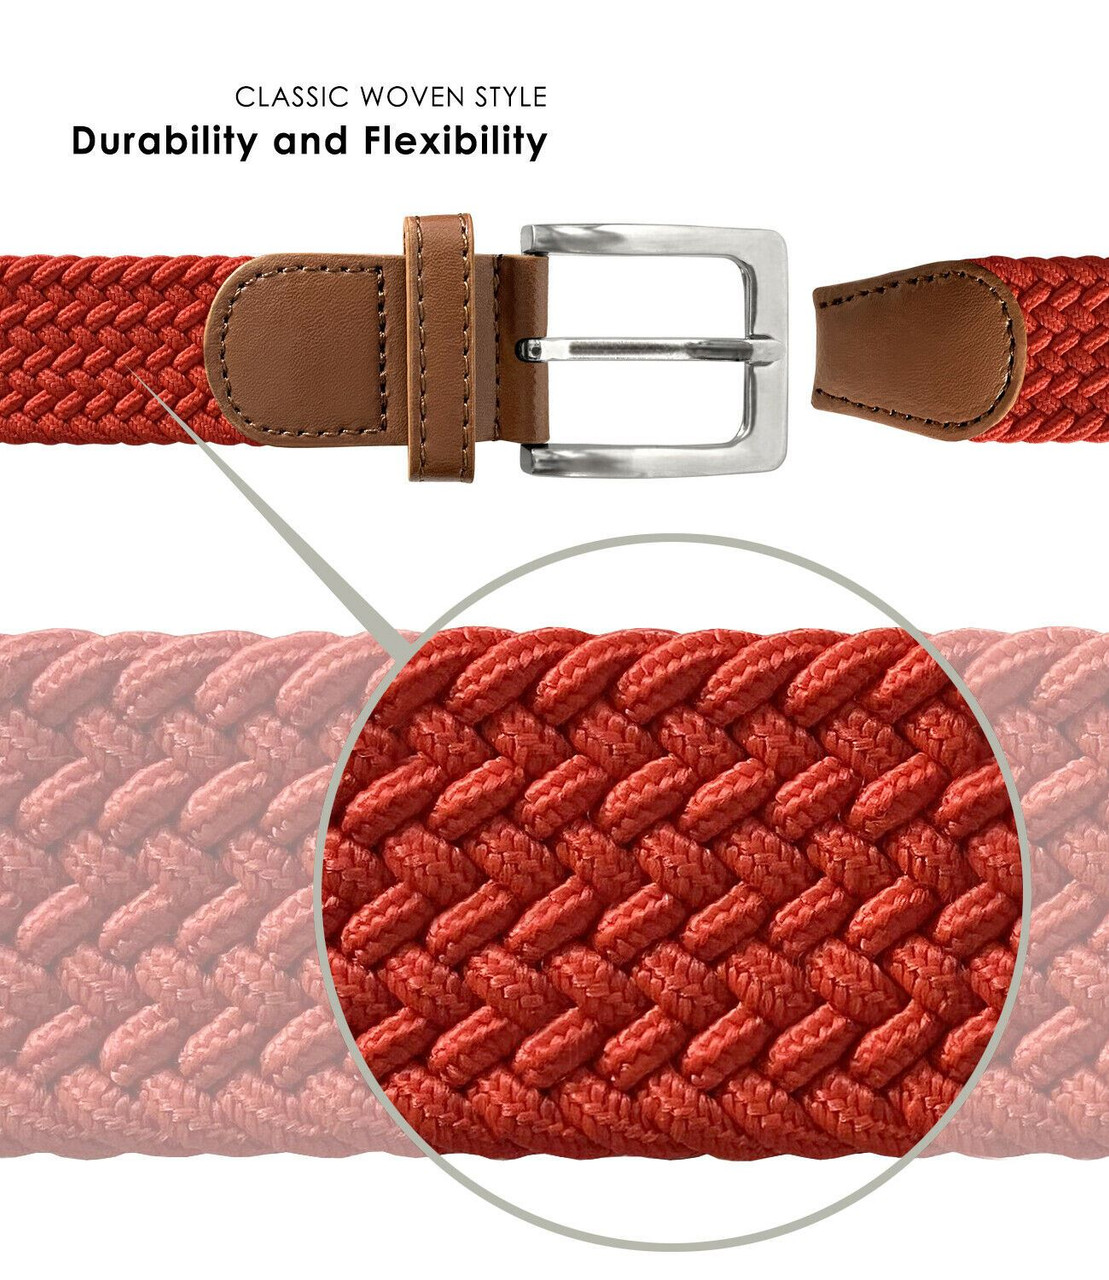 Wide Elastic Fabric or Belting.